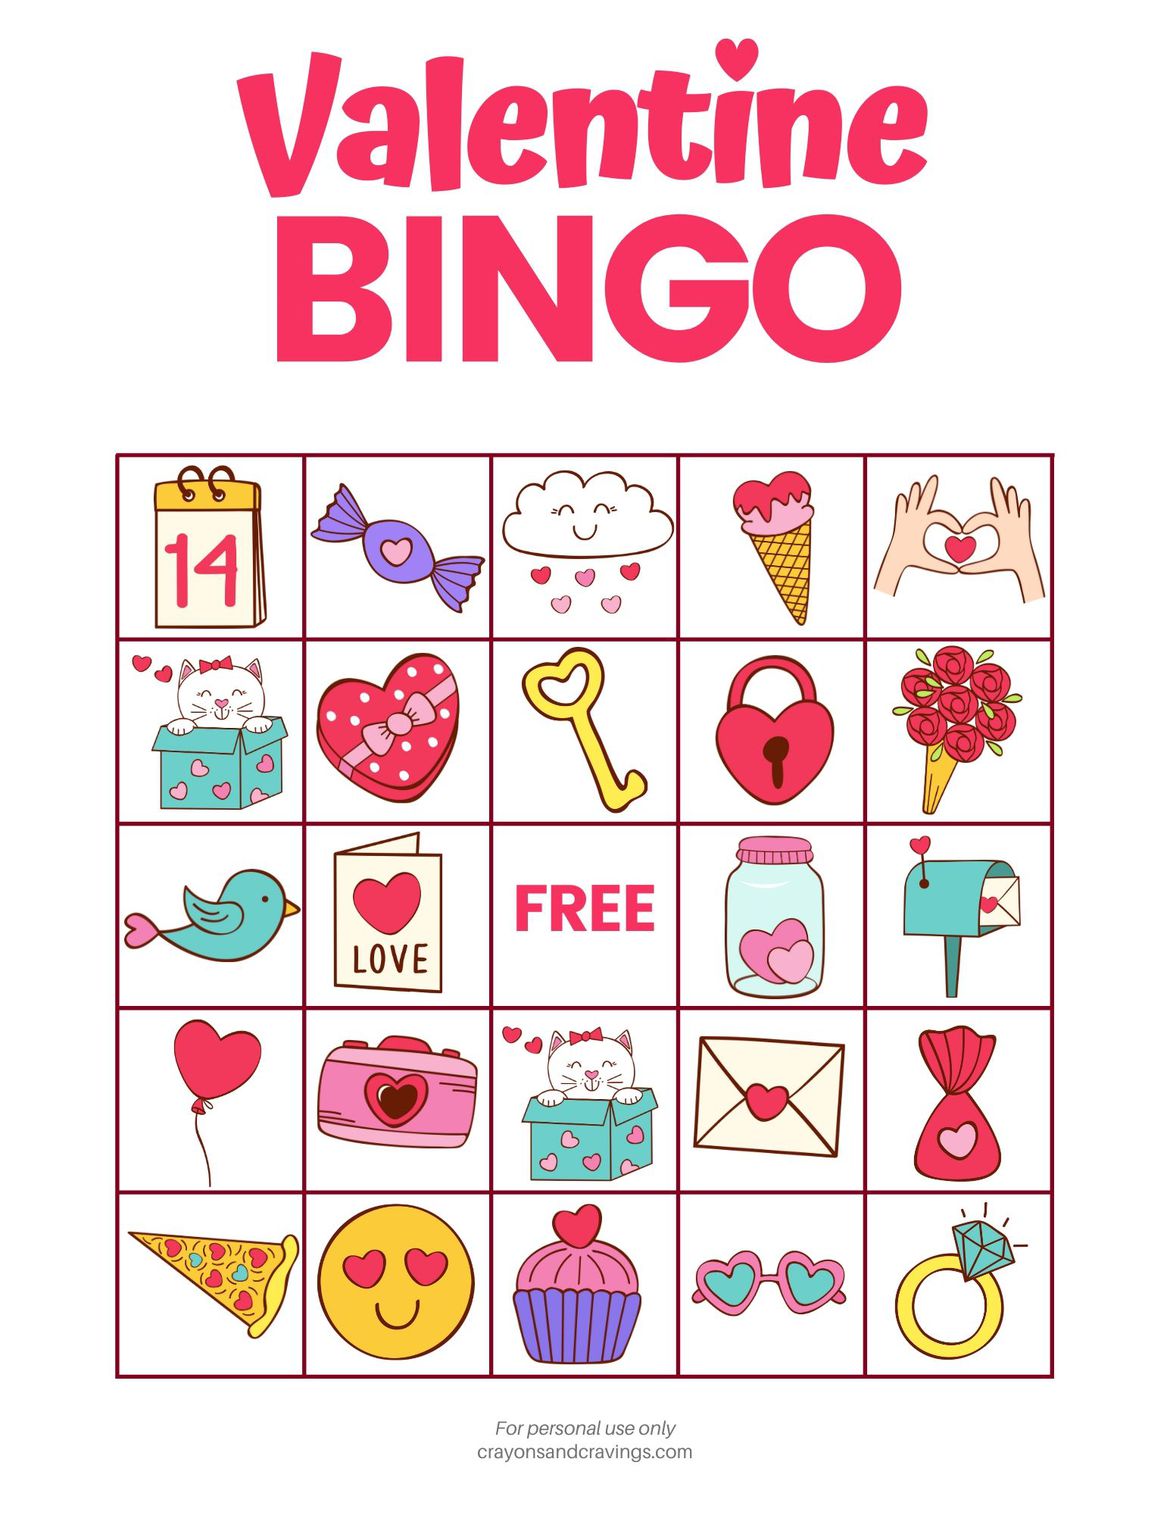 Valentine Bingo Free Printable Valentine S Day Game With 10 Cards